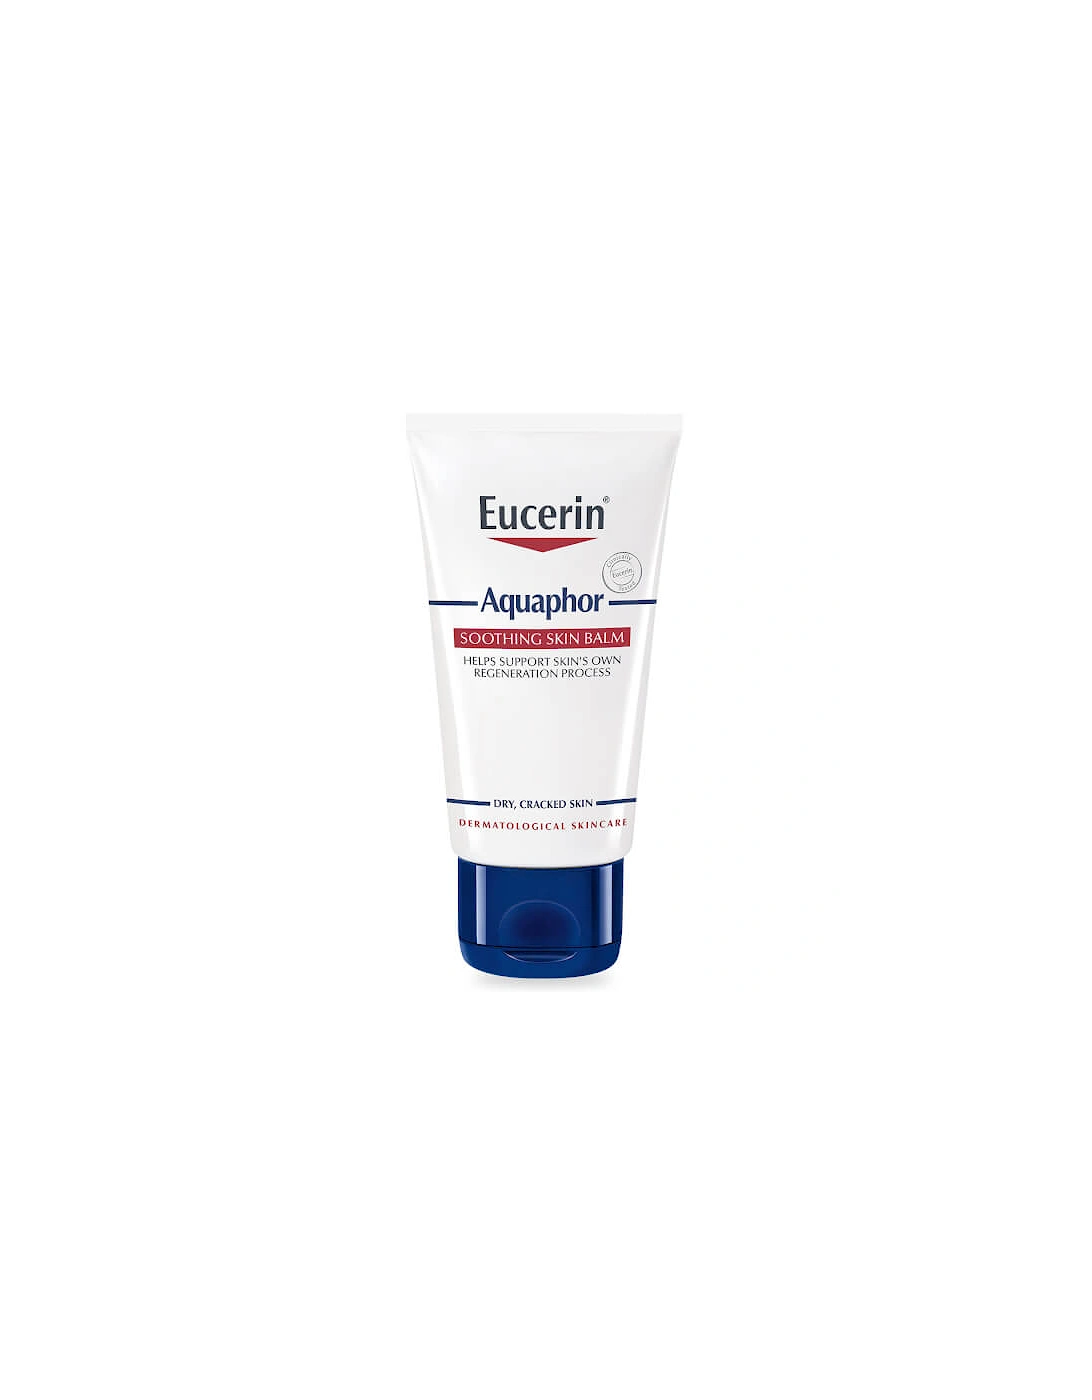 Aquaphor Soothing Skin Balm 45ml - Eucerin, 2 of 1